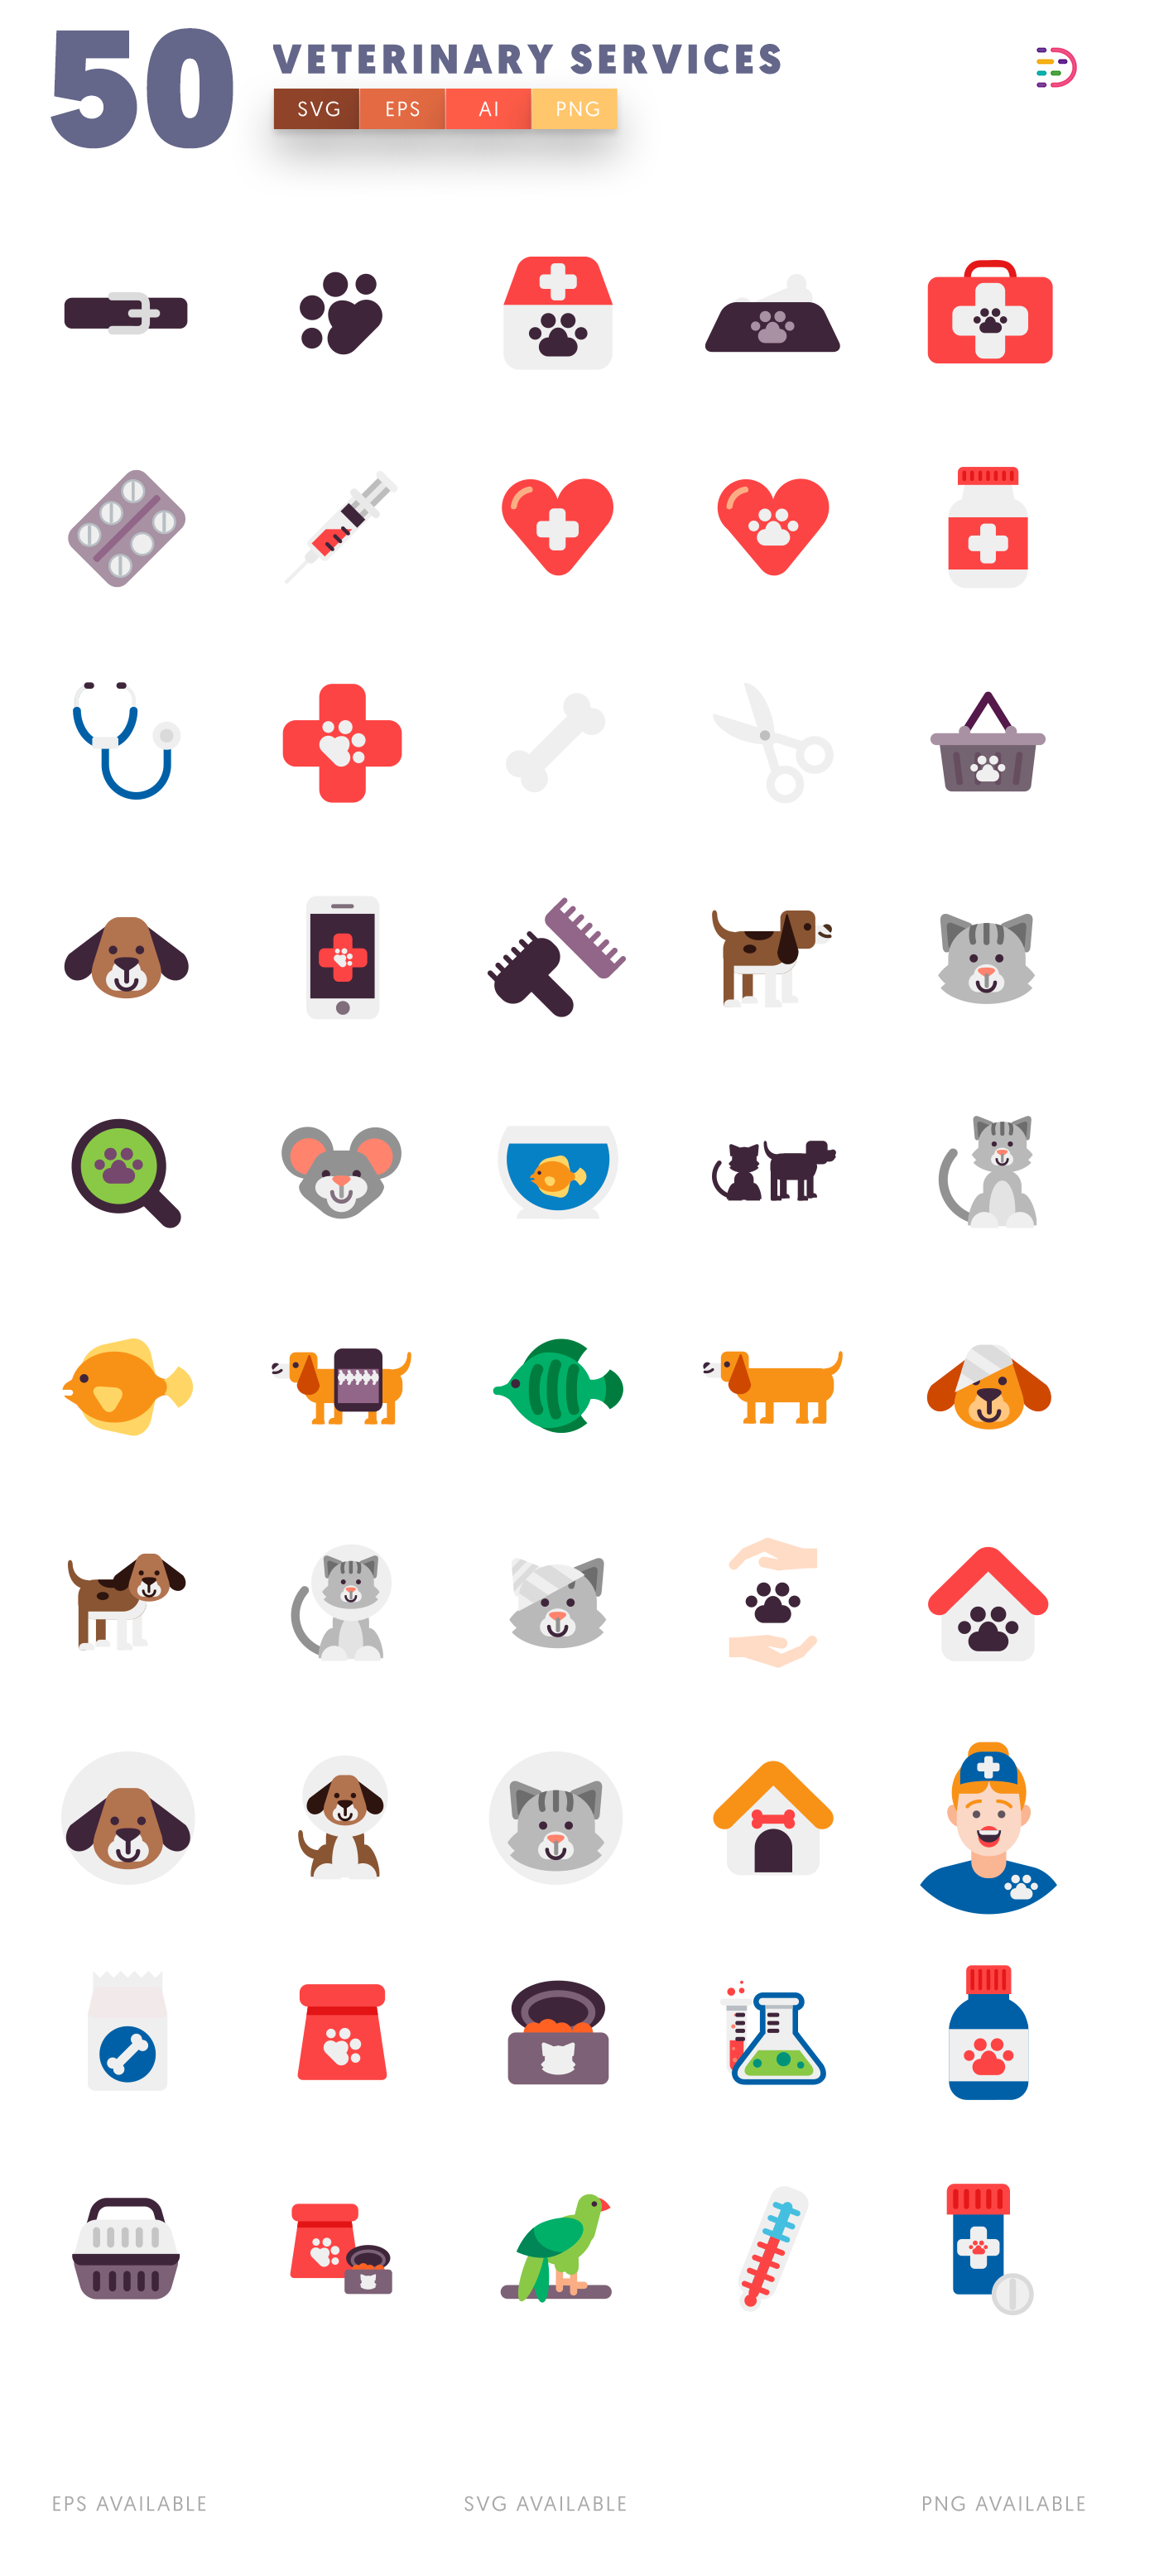 Full vector Veterinary Icons